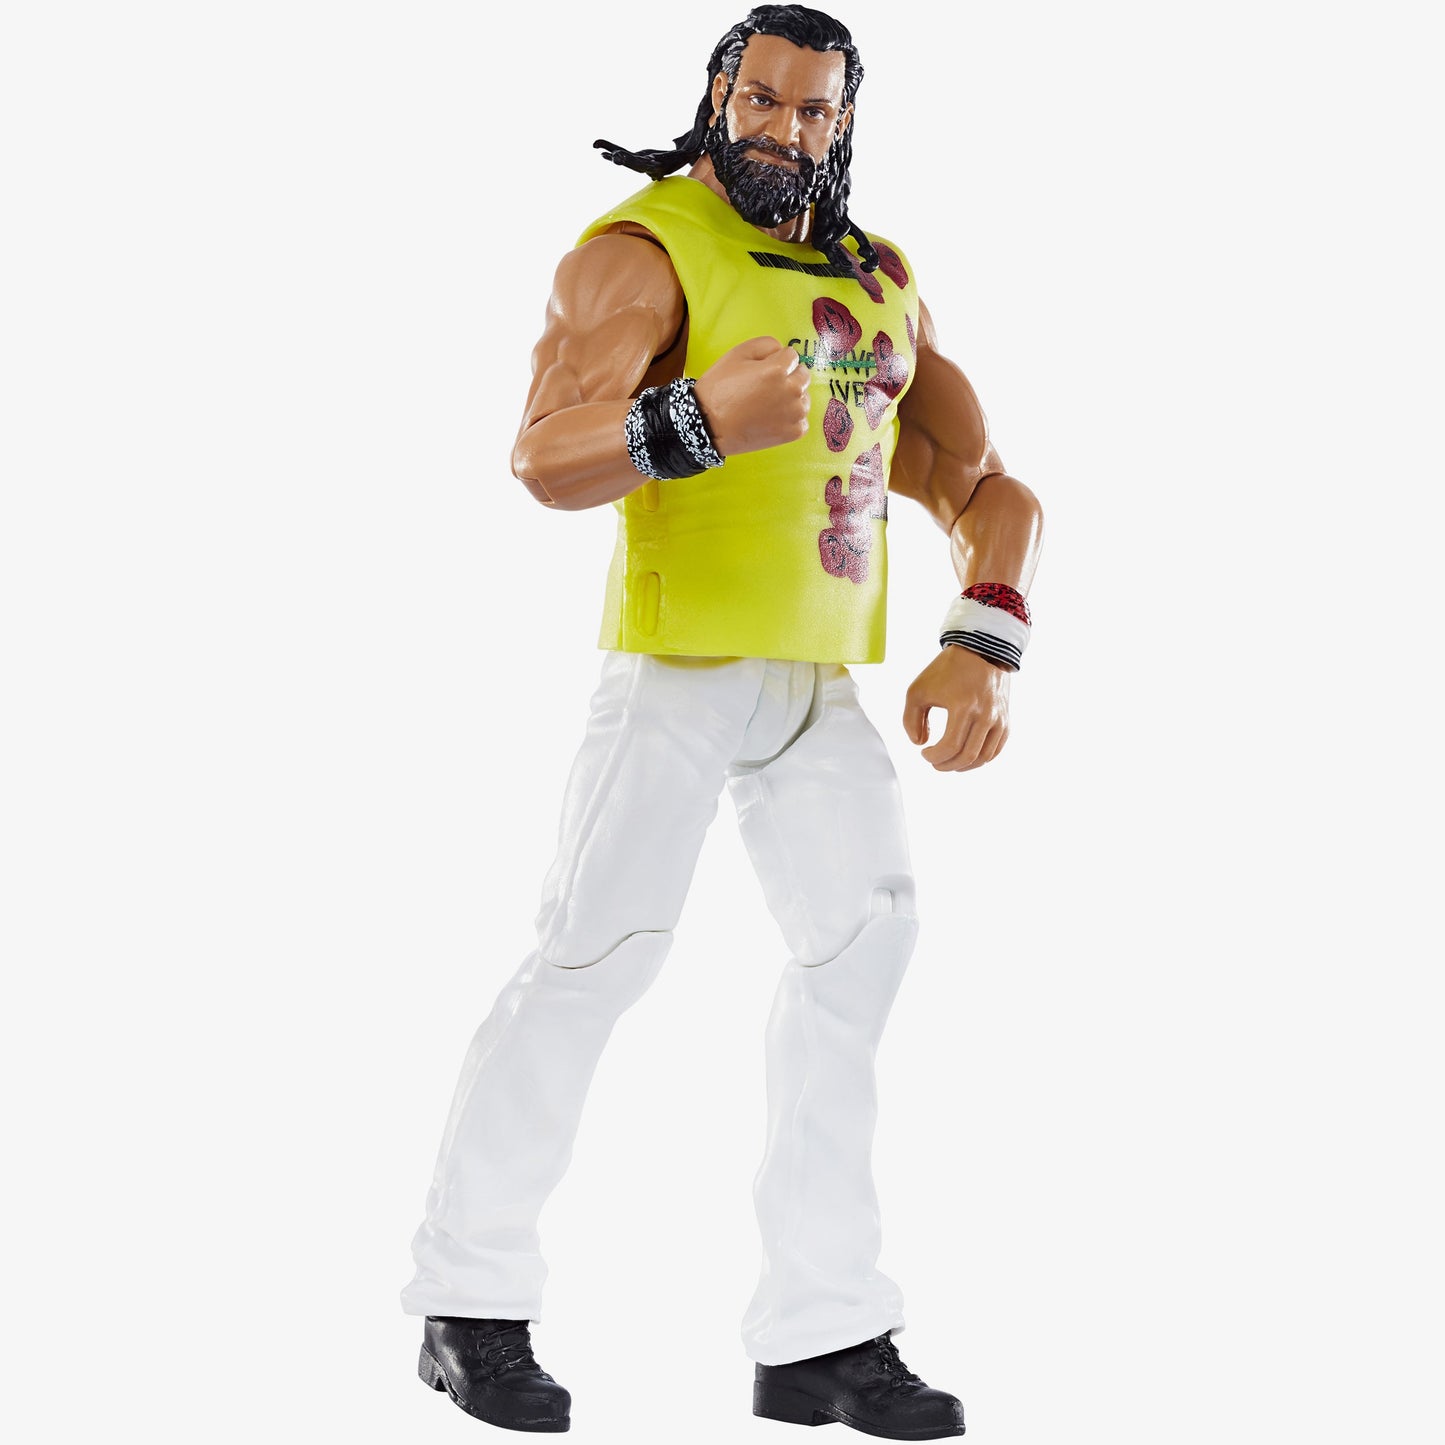 Elias - WWE WrestleMania 35 Basic Series